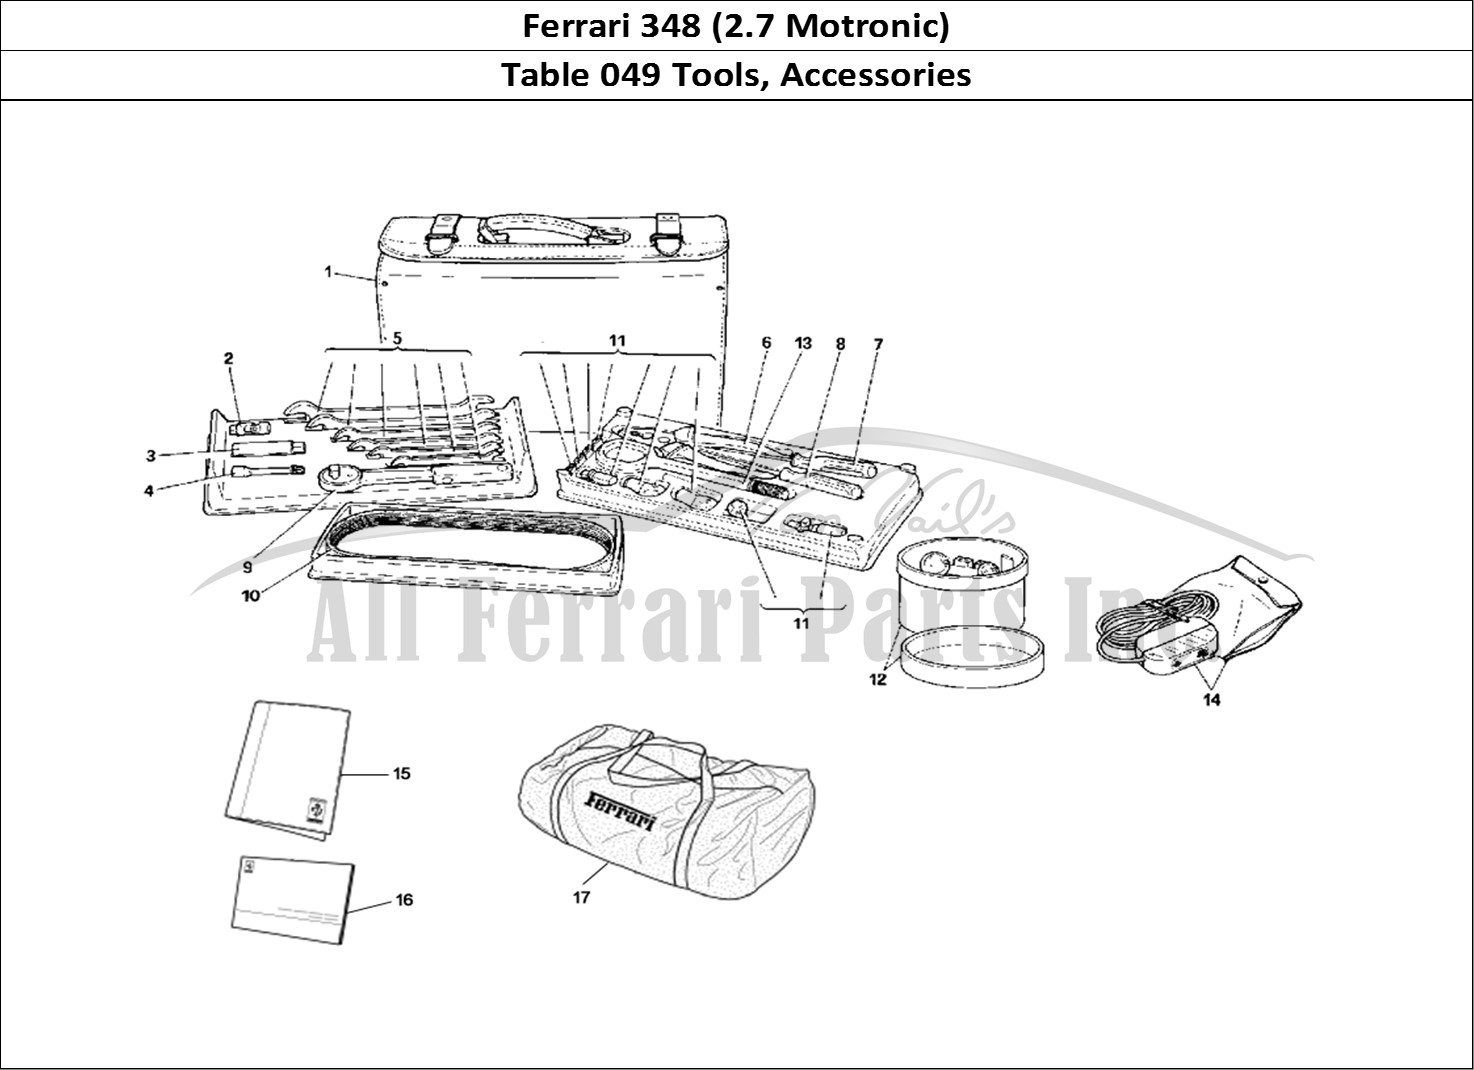 Ferrari Parts Ferrari 348 (2.7 Motronic) Page 049 Tools Equipment